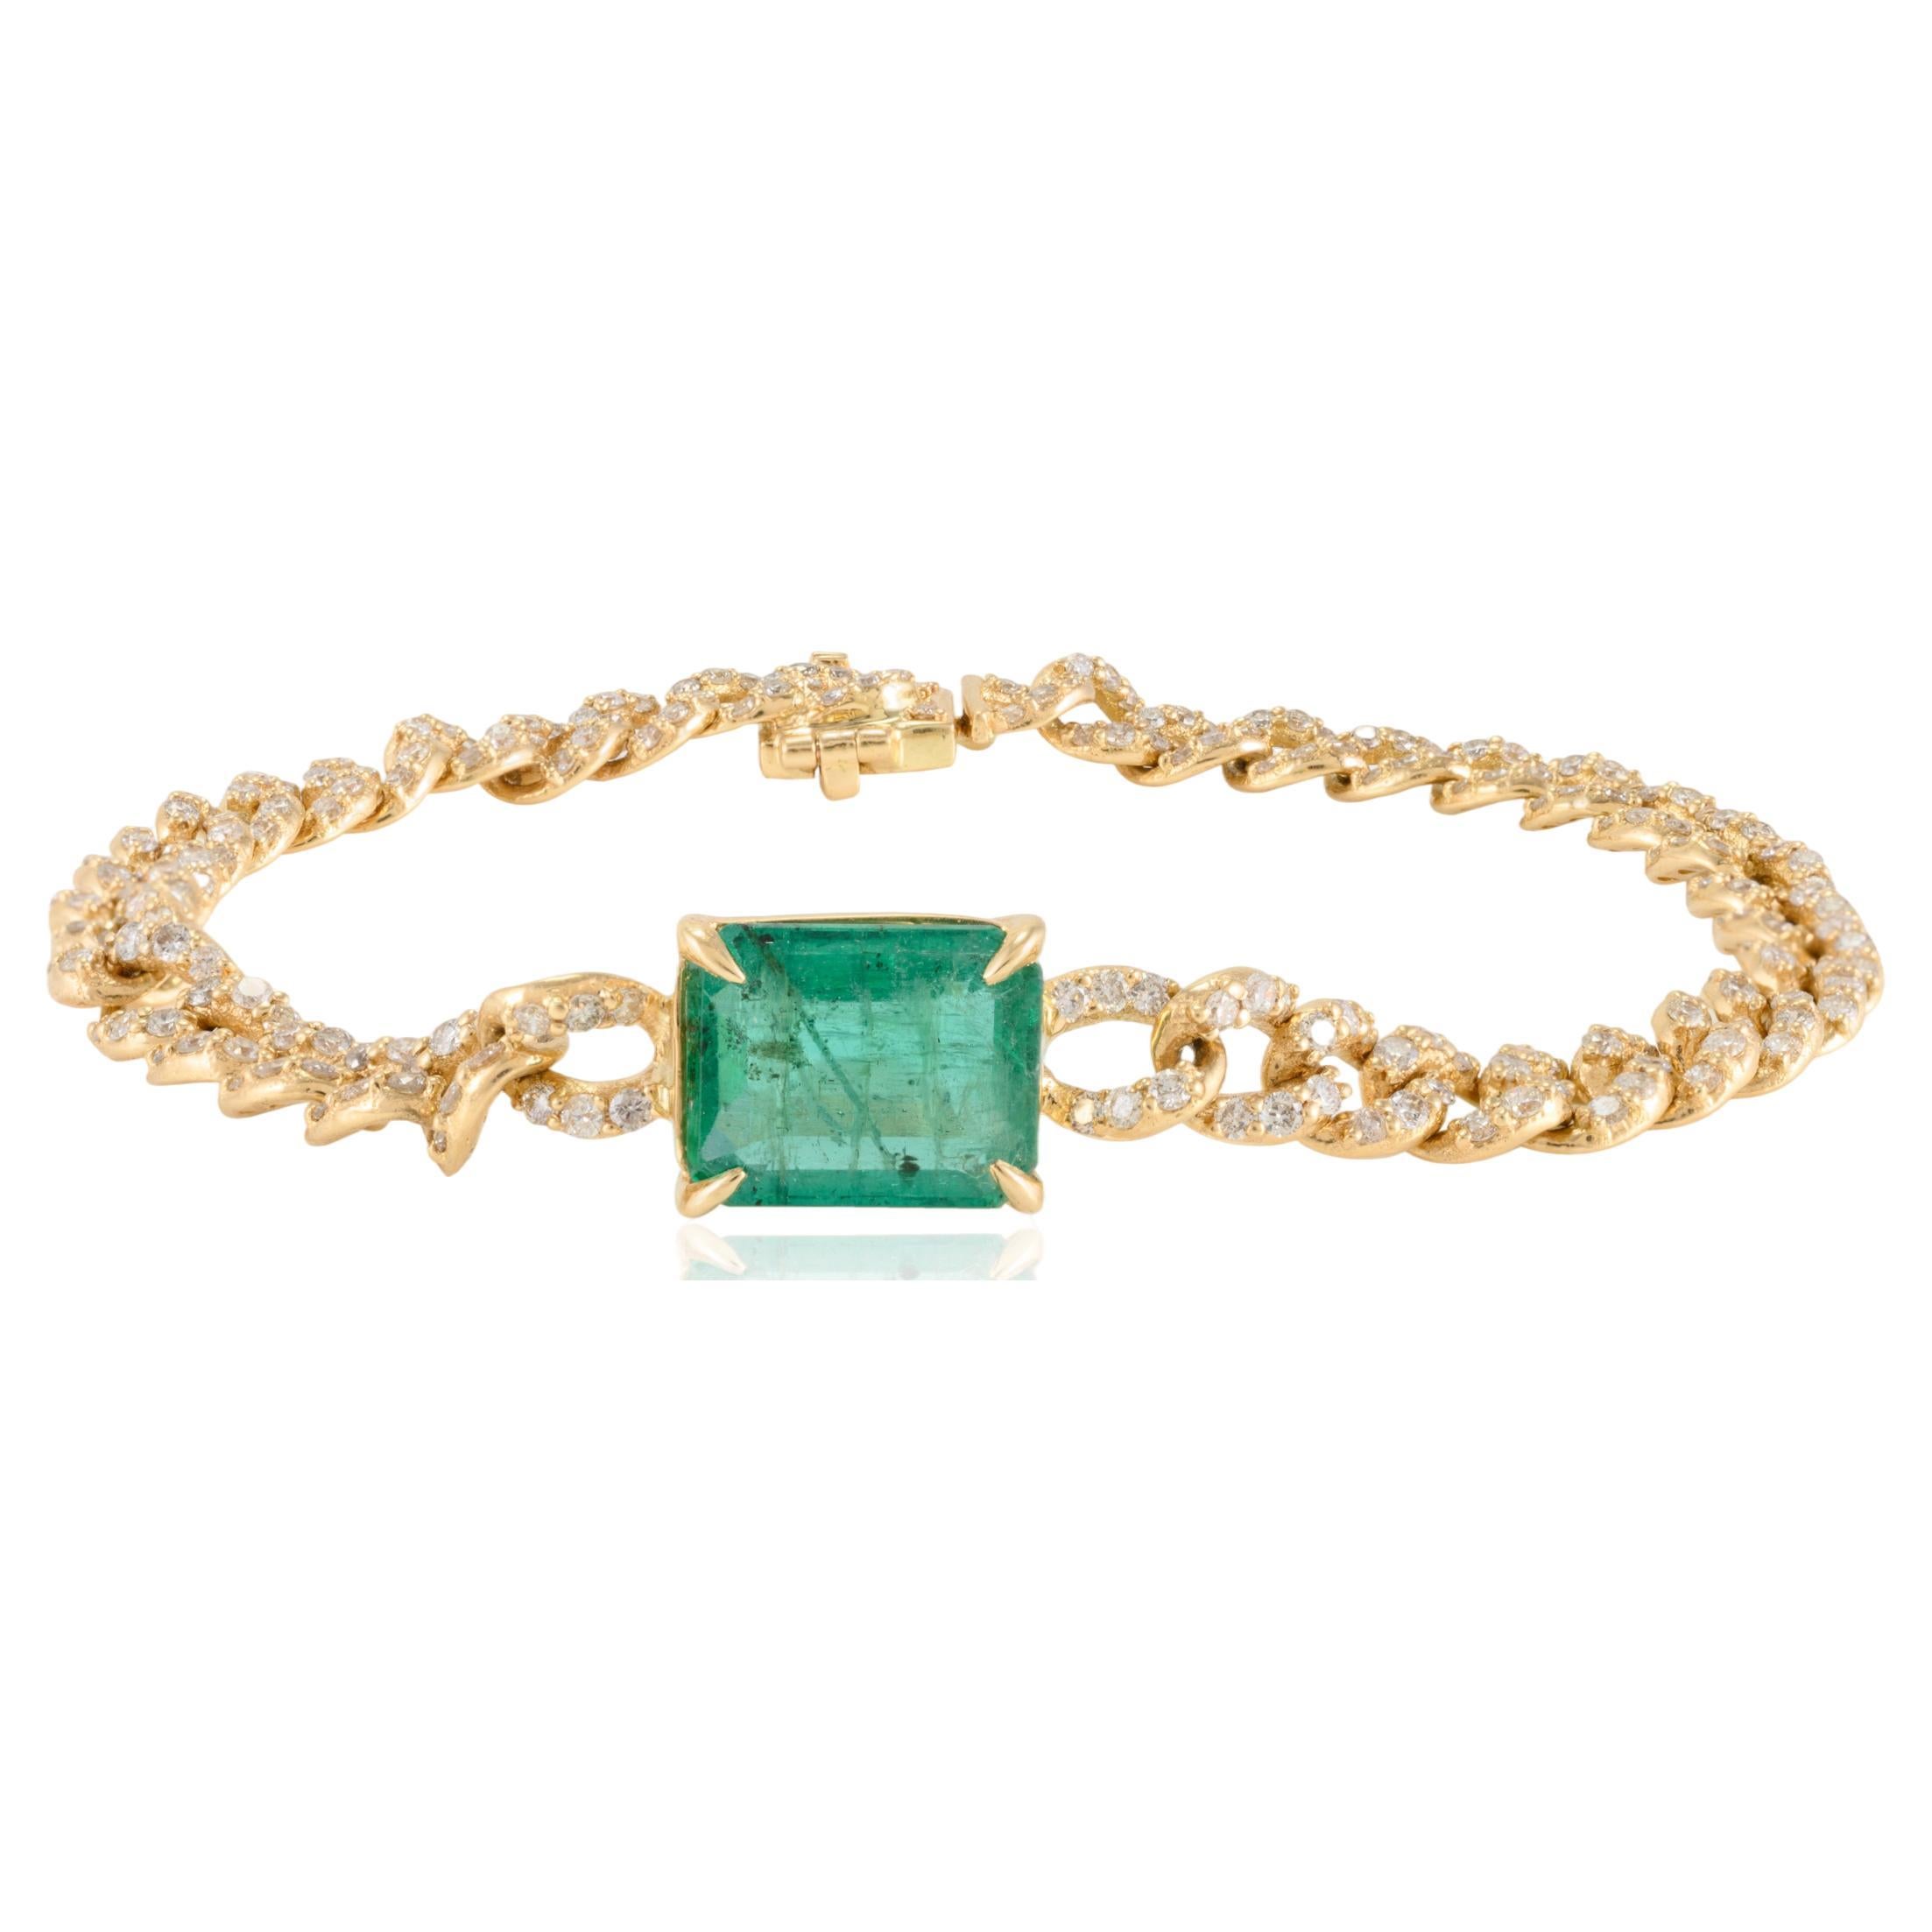 Statement Emerald Diamond Chain Bracelet in 18k Solid Yellow Gold